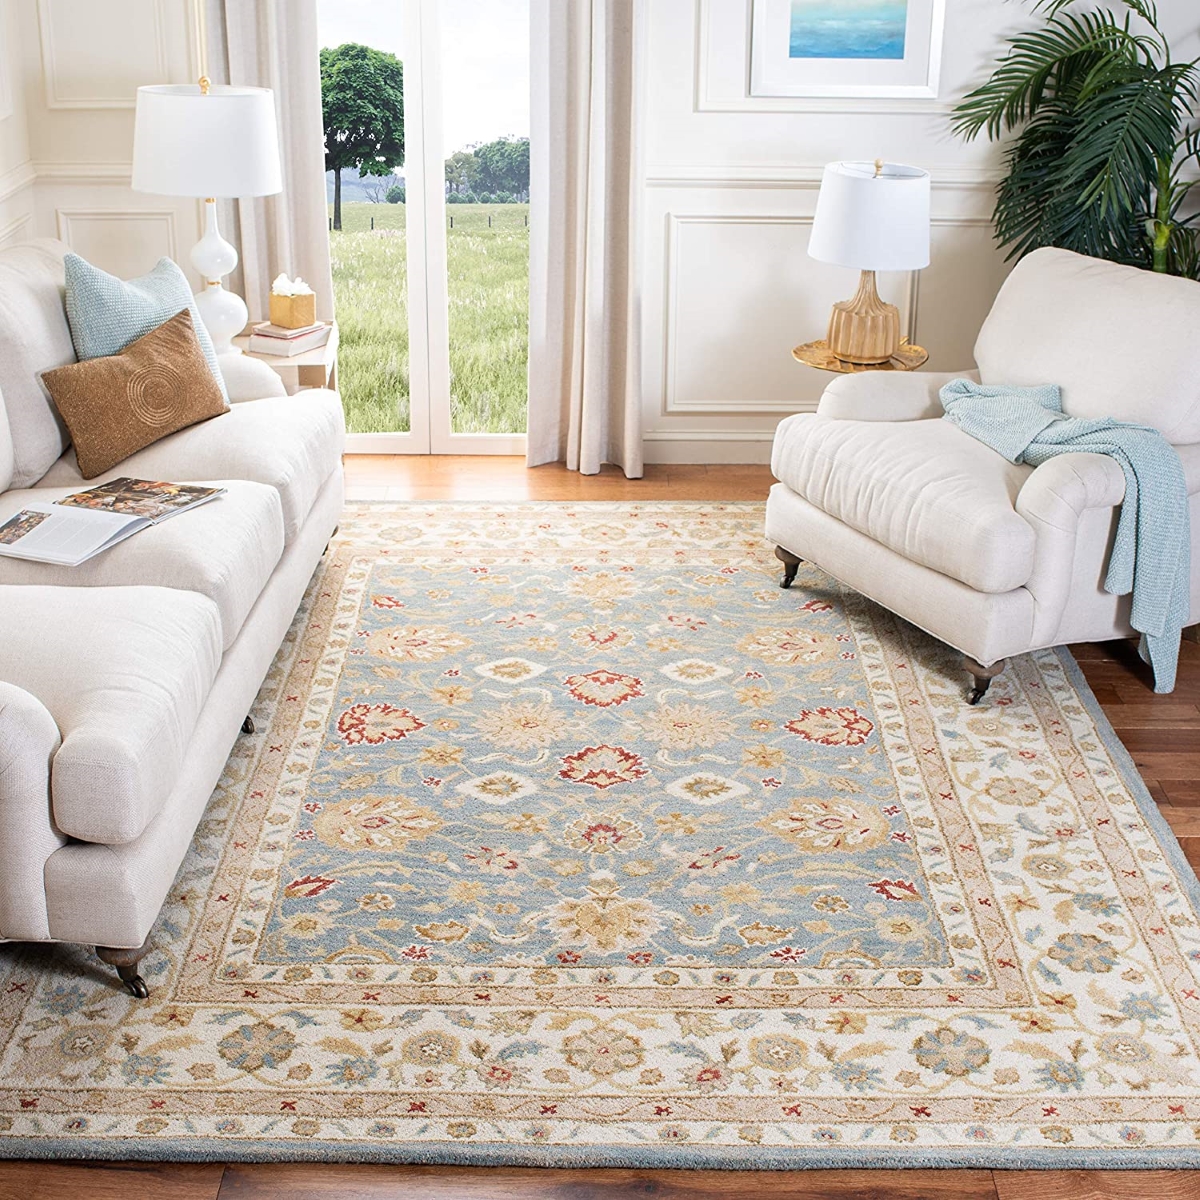 types of rugs - living room rug